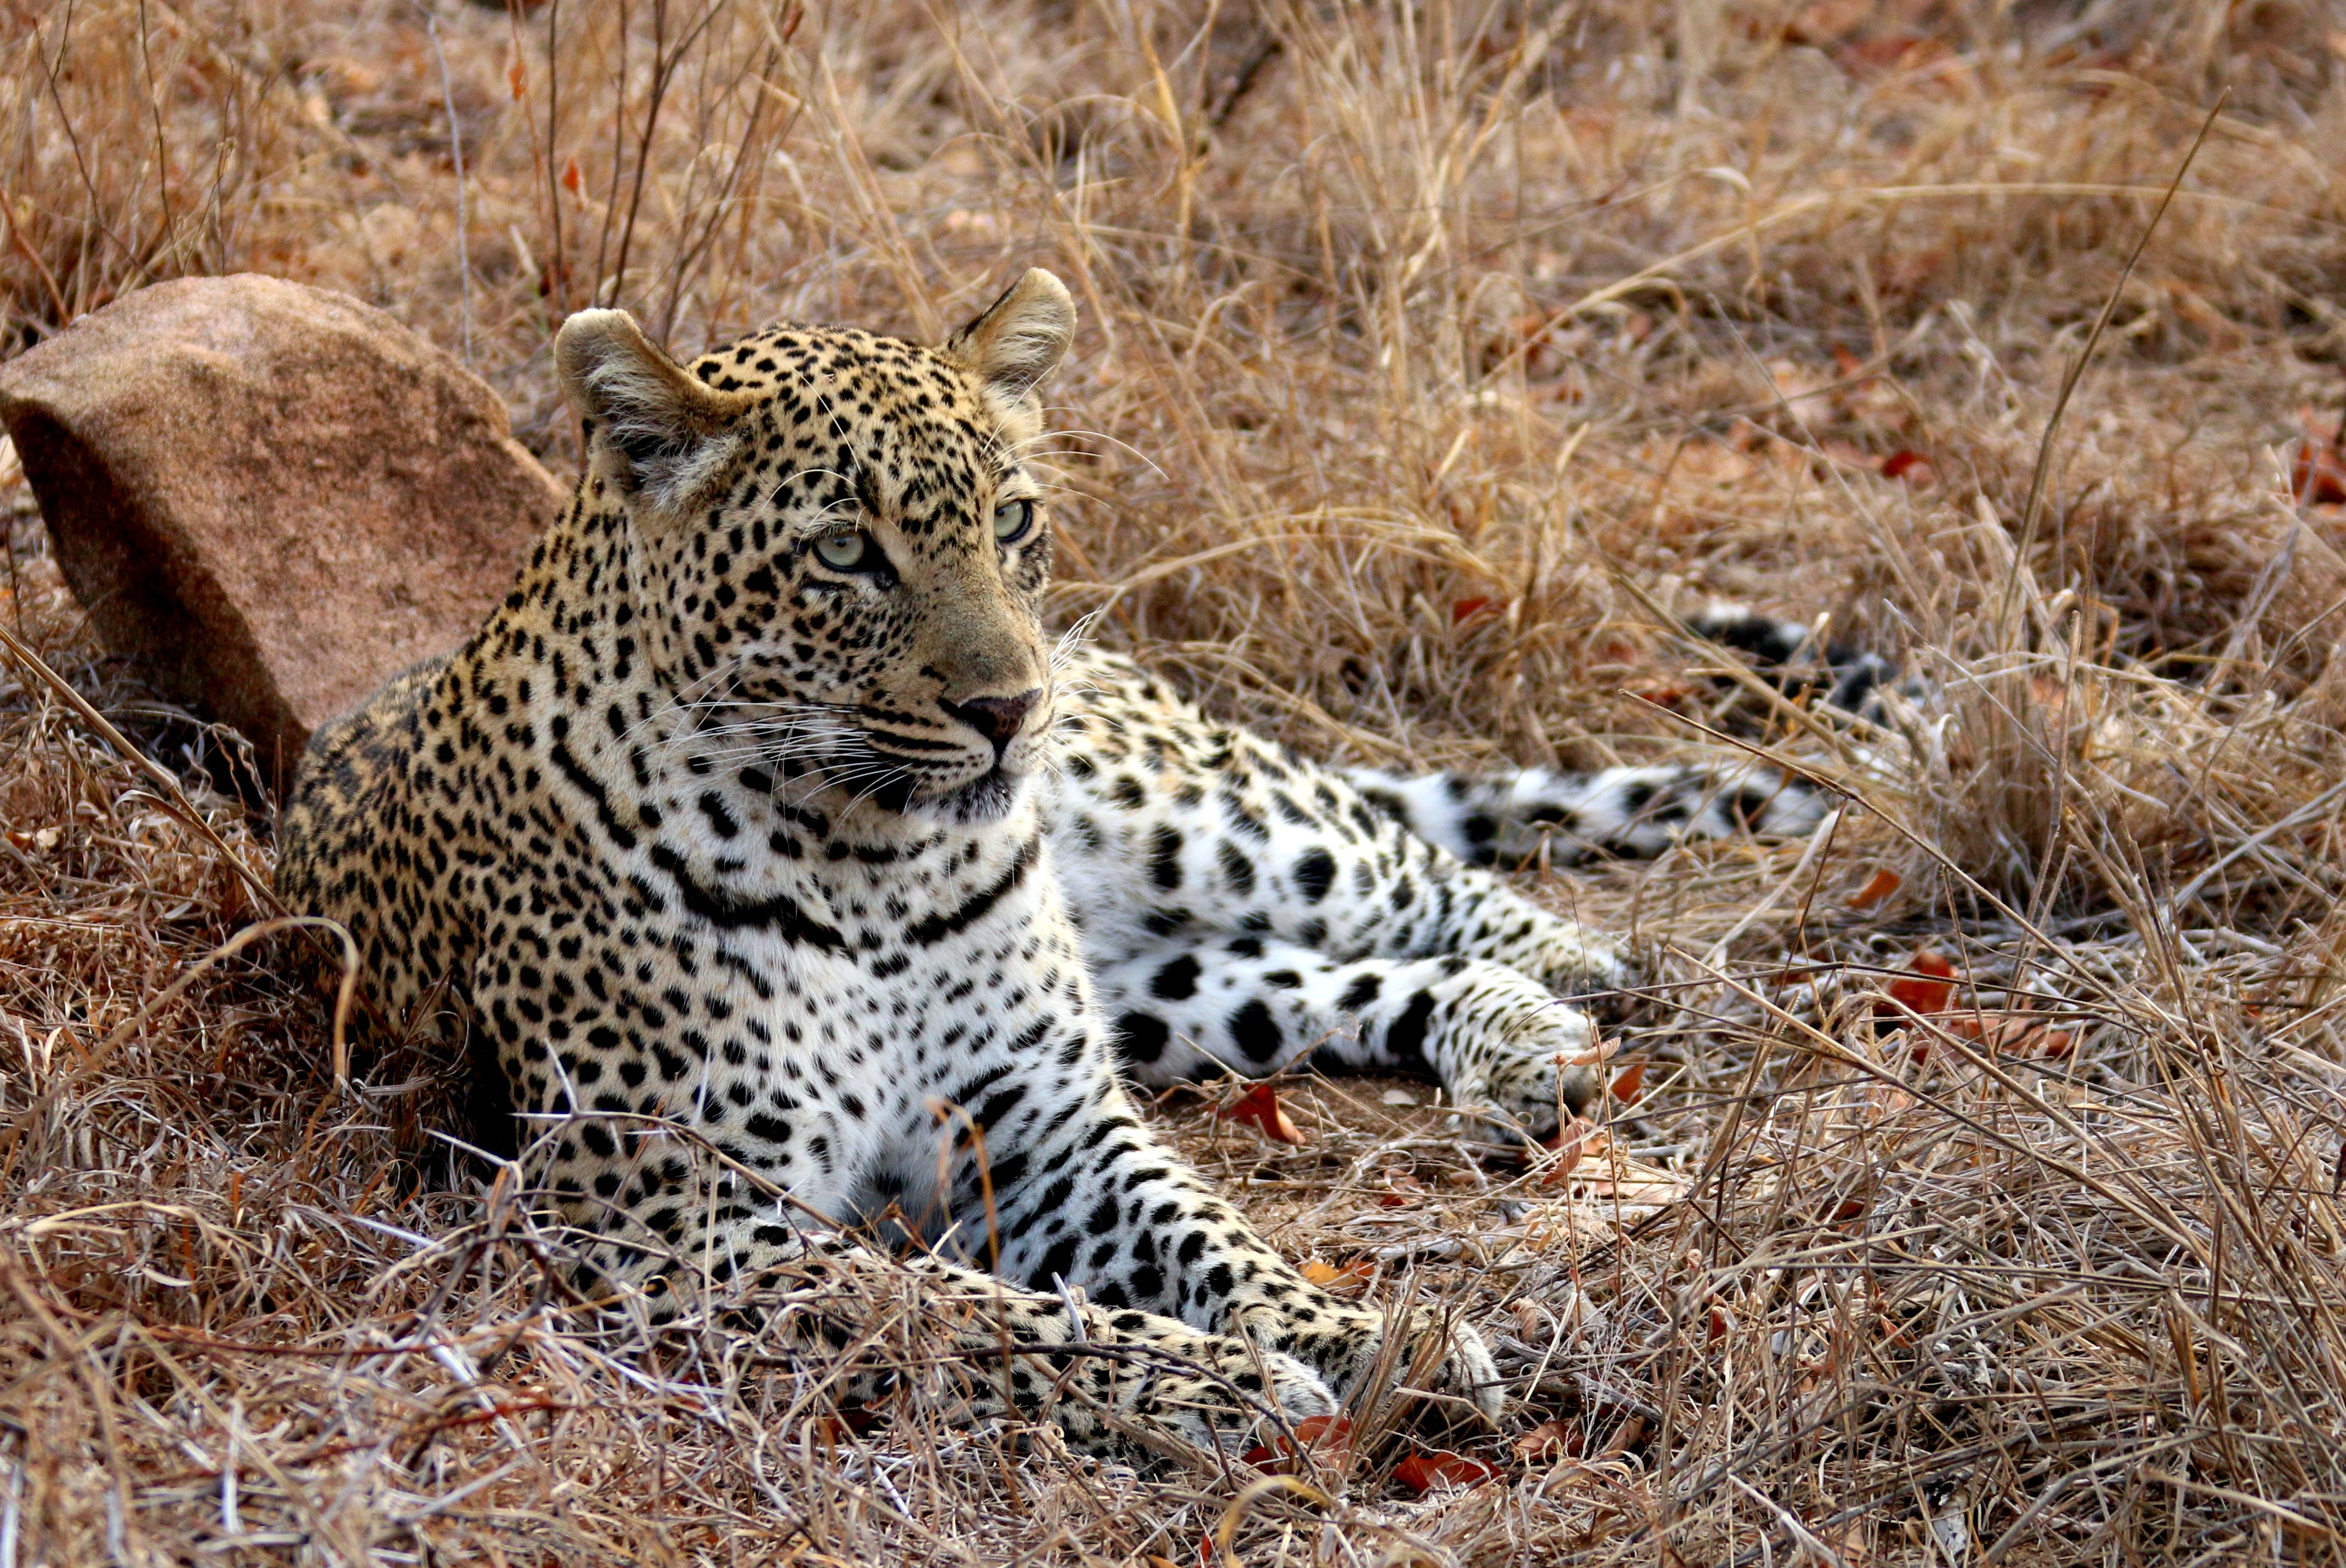 Leopard relaxing in Africa by WiseTraveller